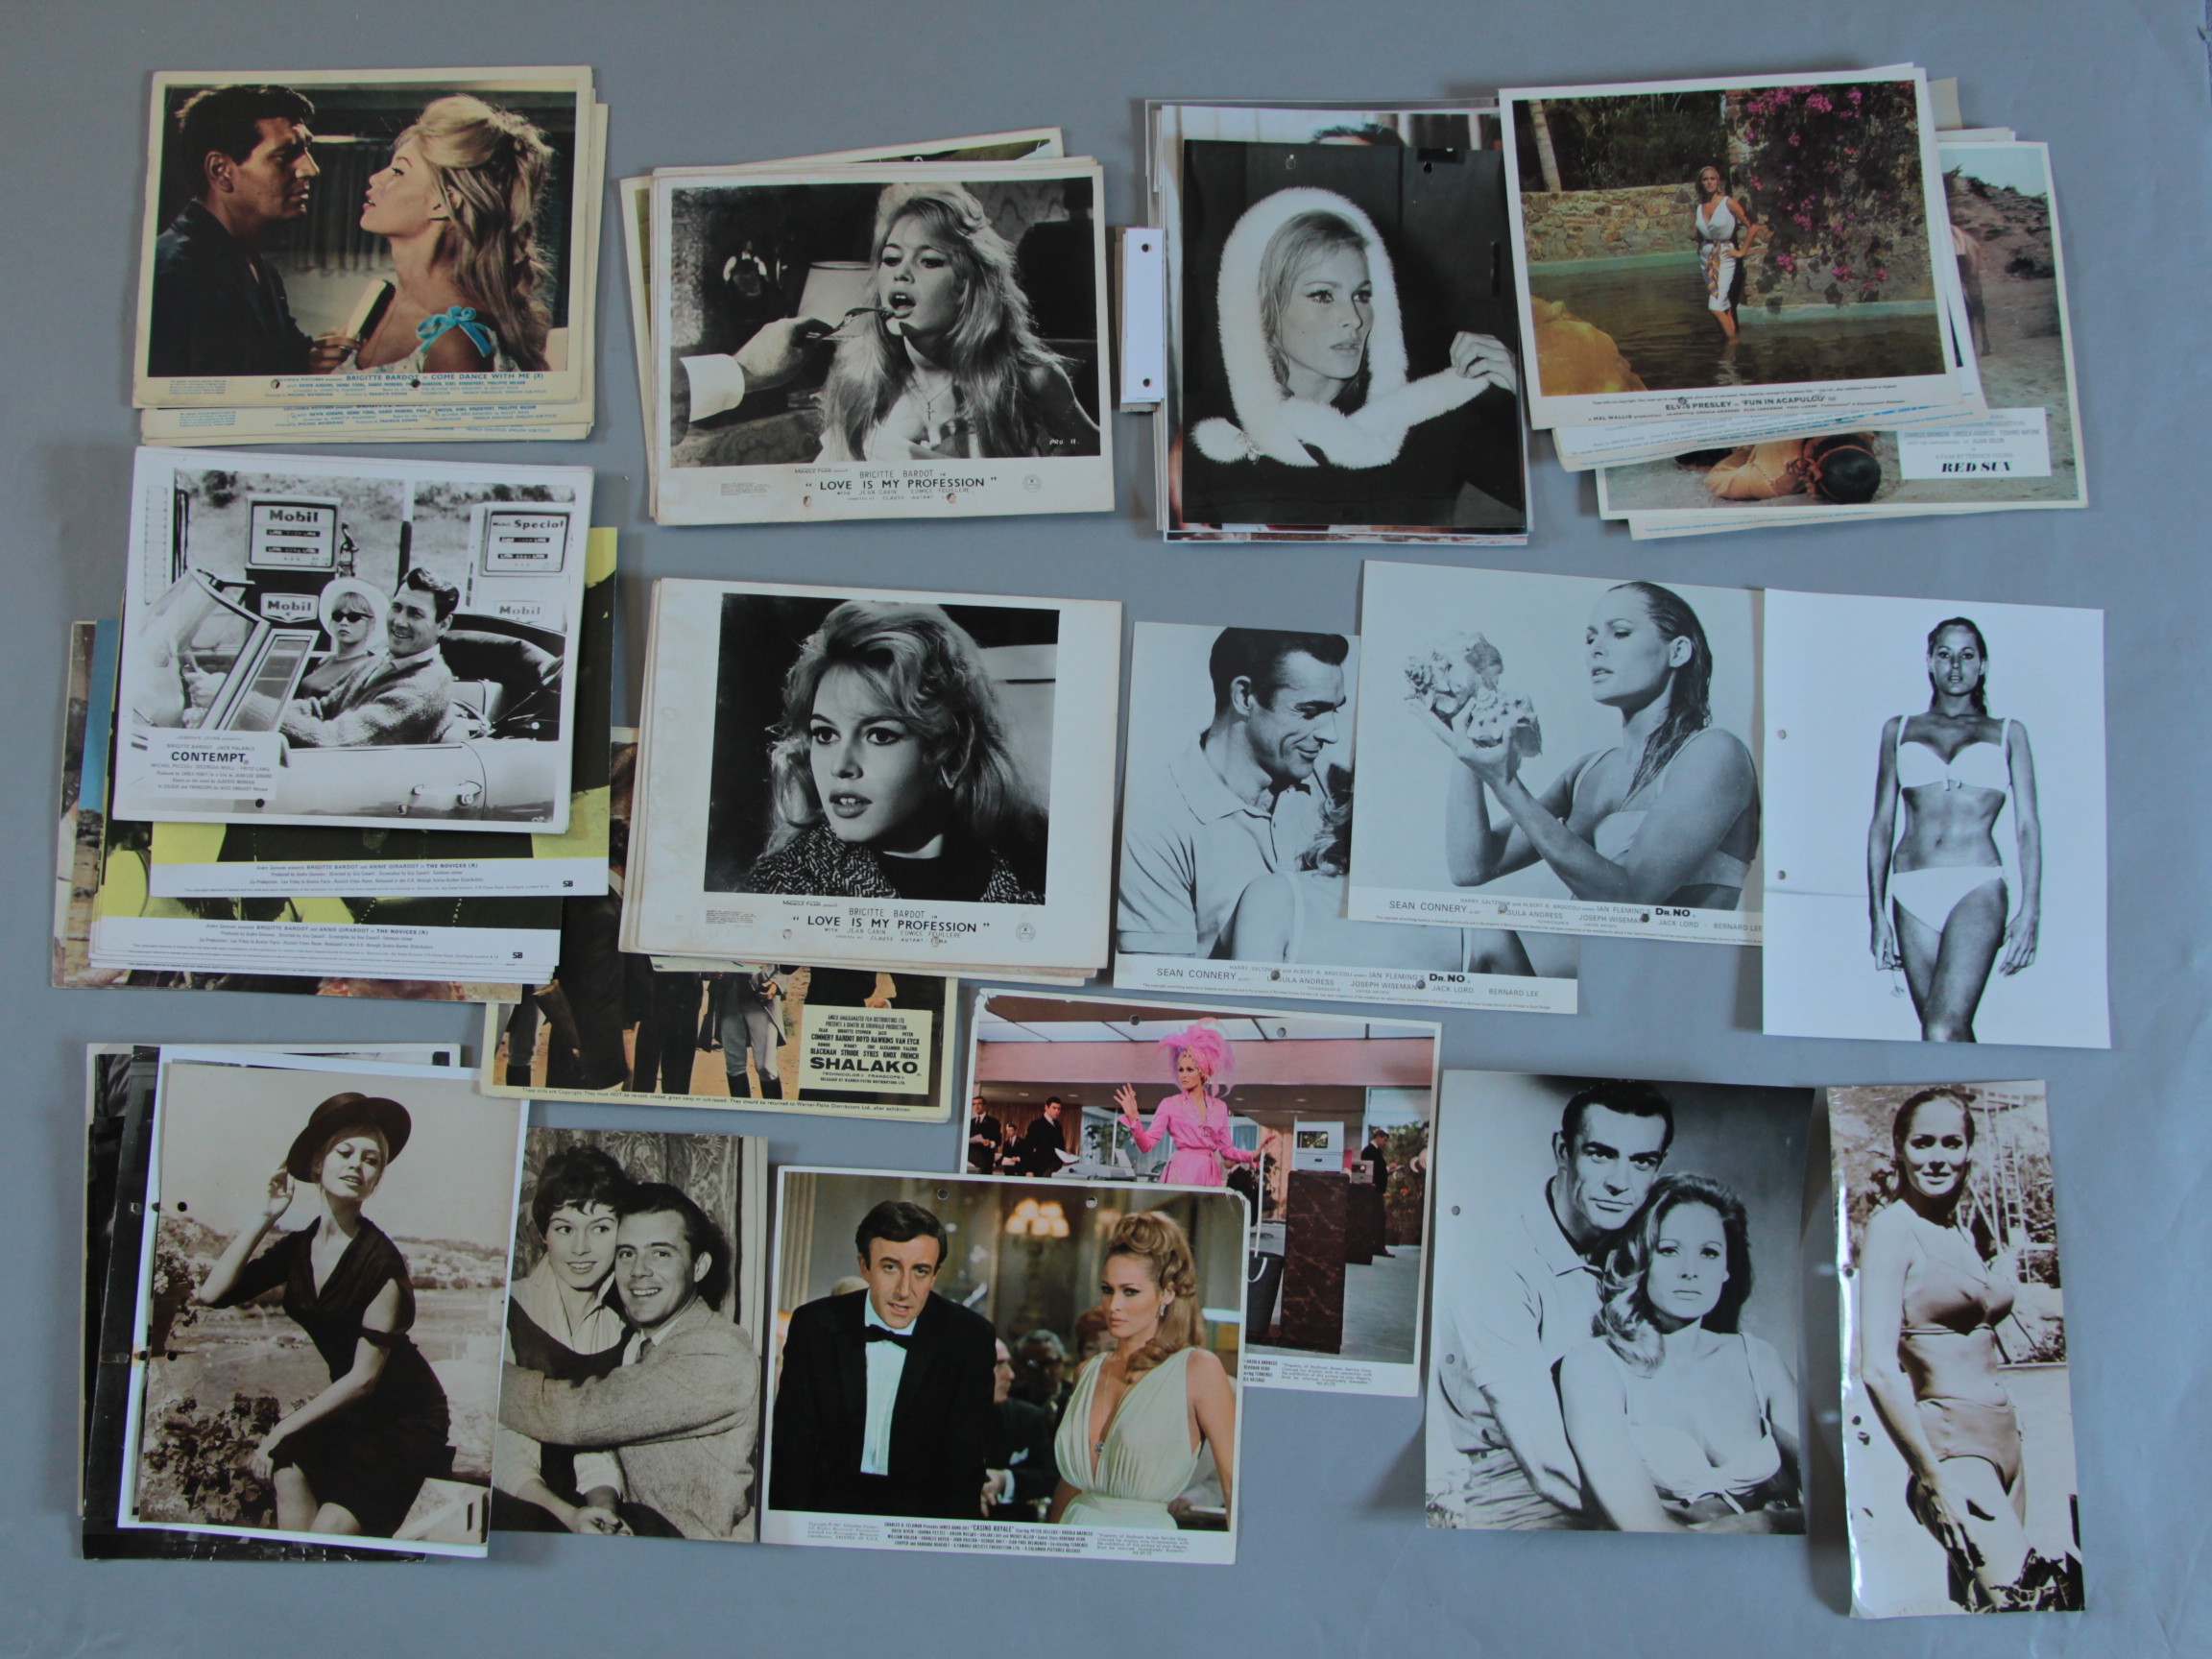 Brigitte Bardot and Ursula Andress photos and lobby cards (part sets),